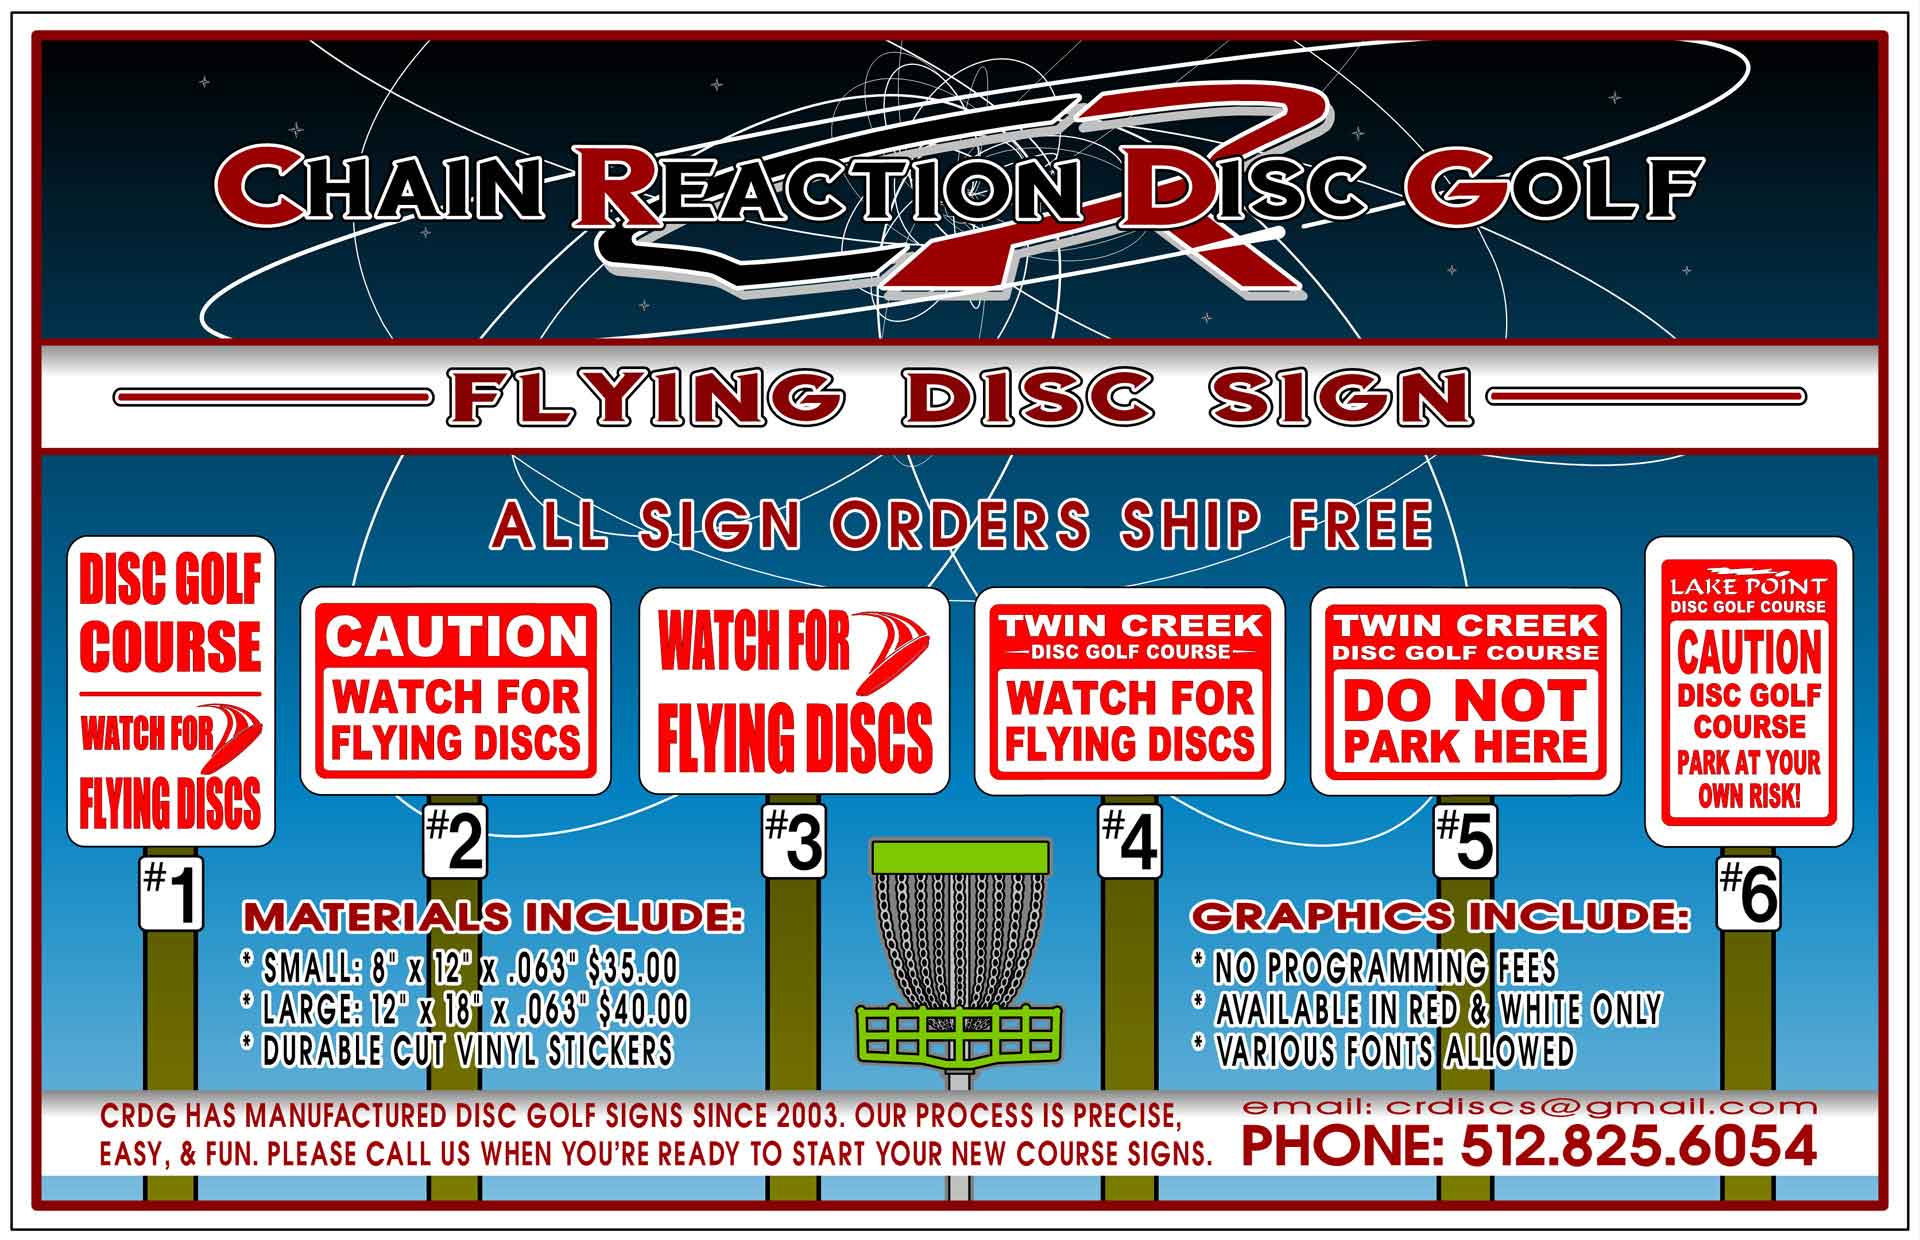 Chain Reaction Disc Golf Flying Disc Sign Banner Link